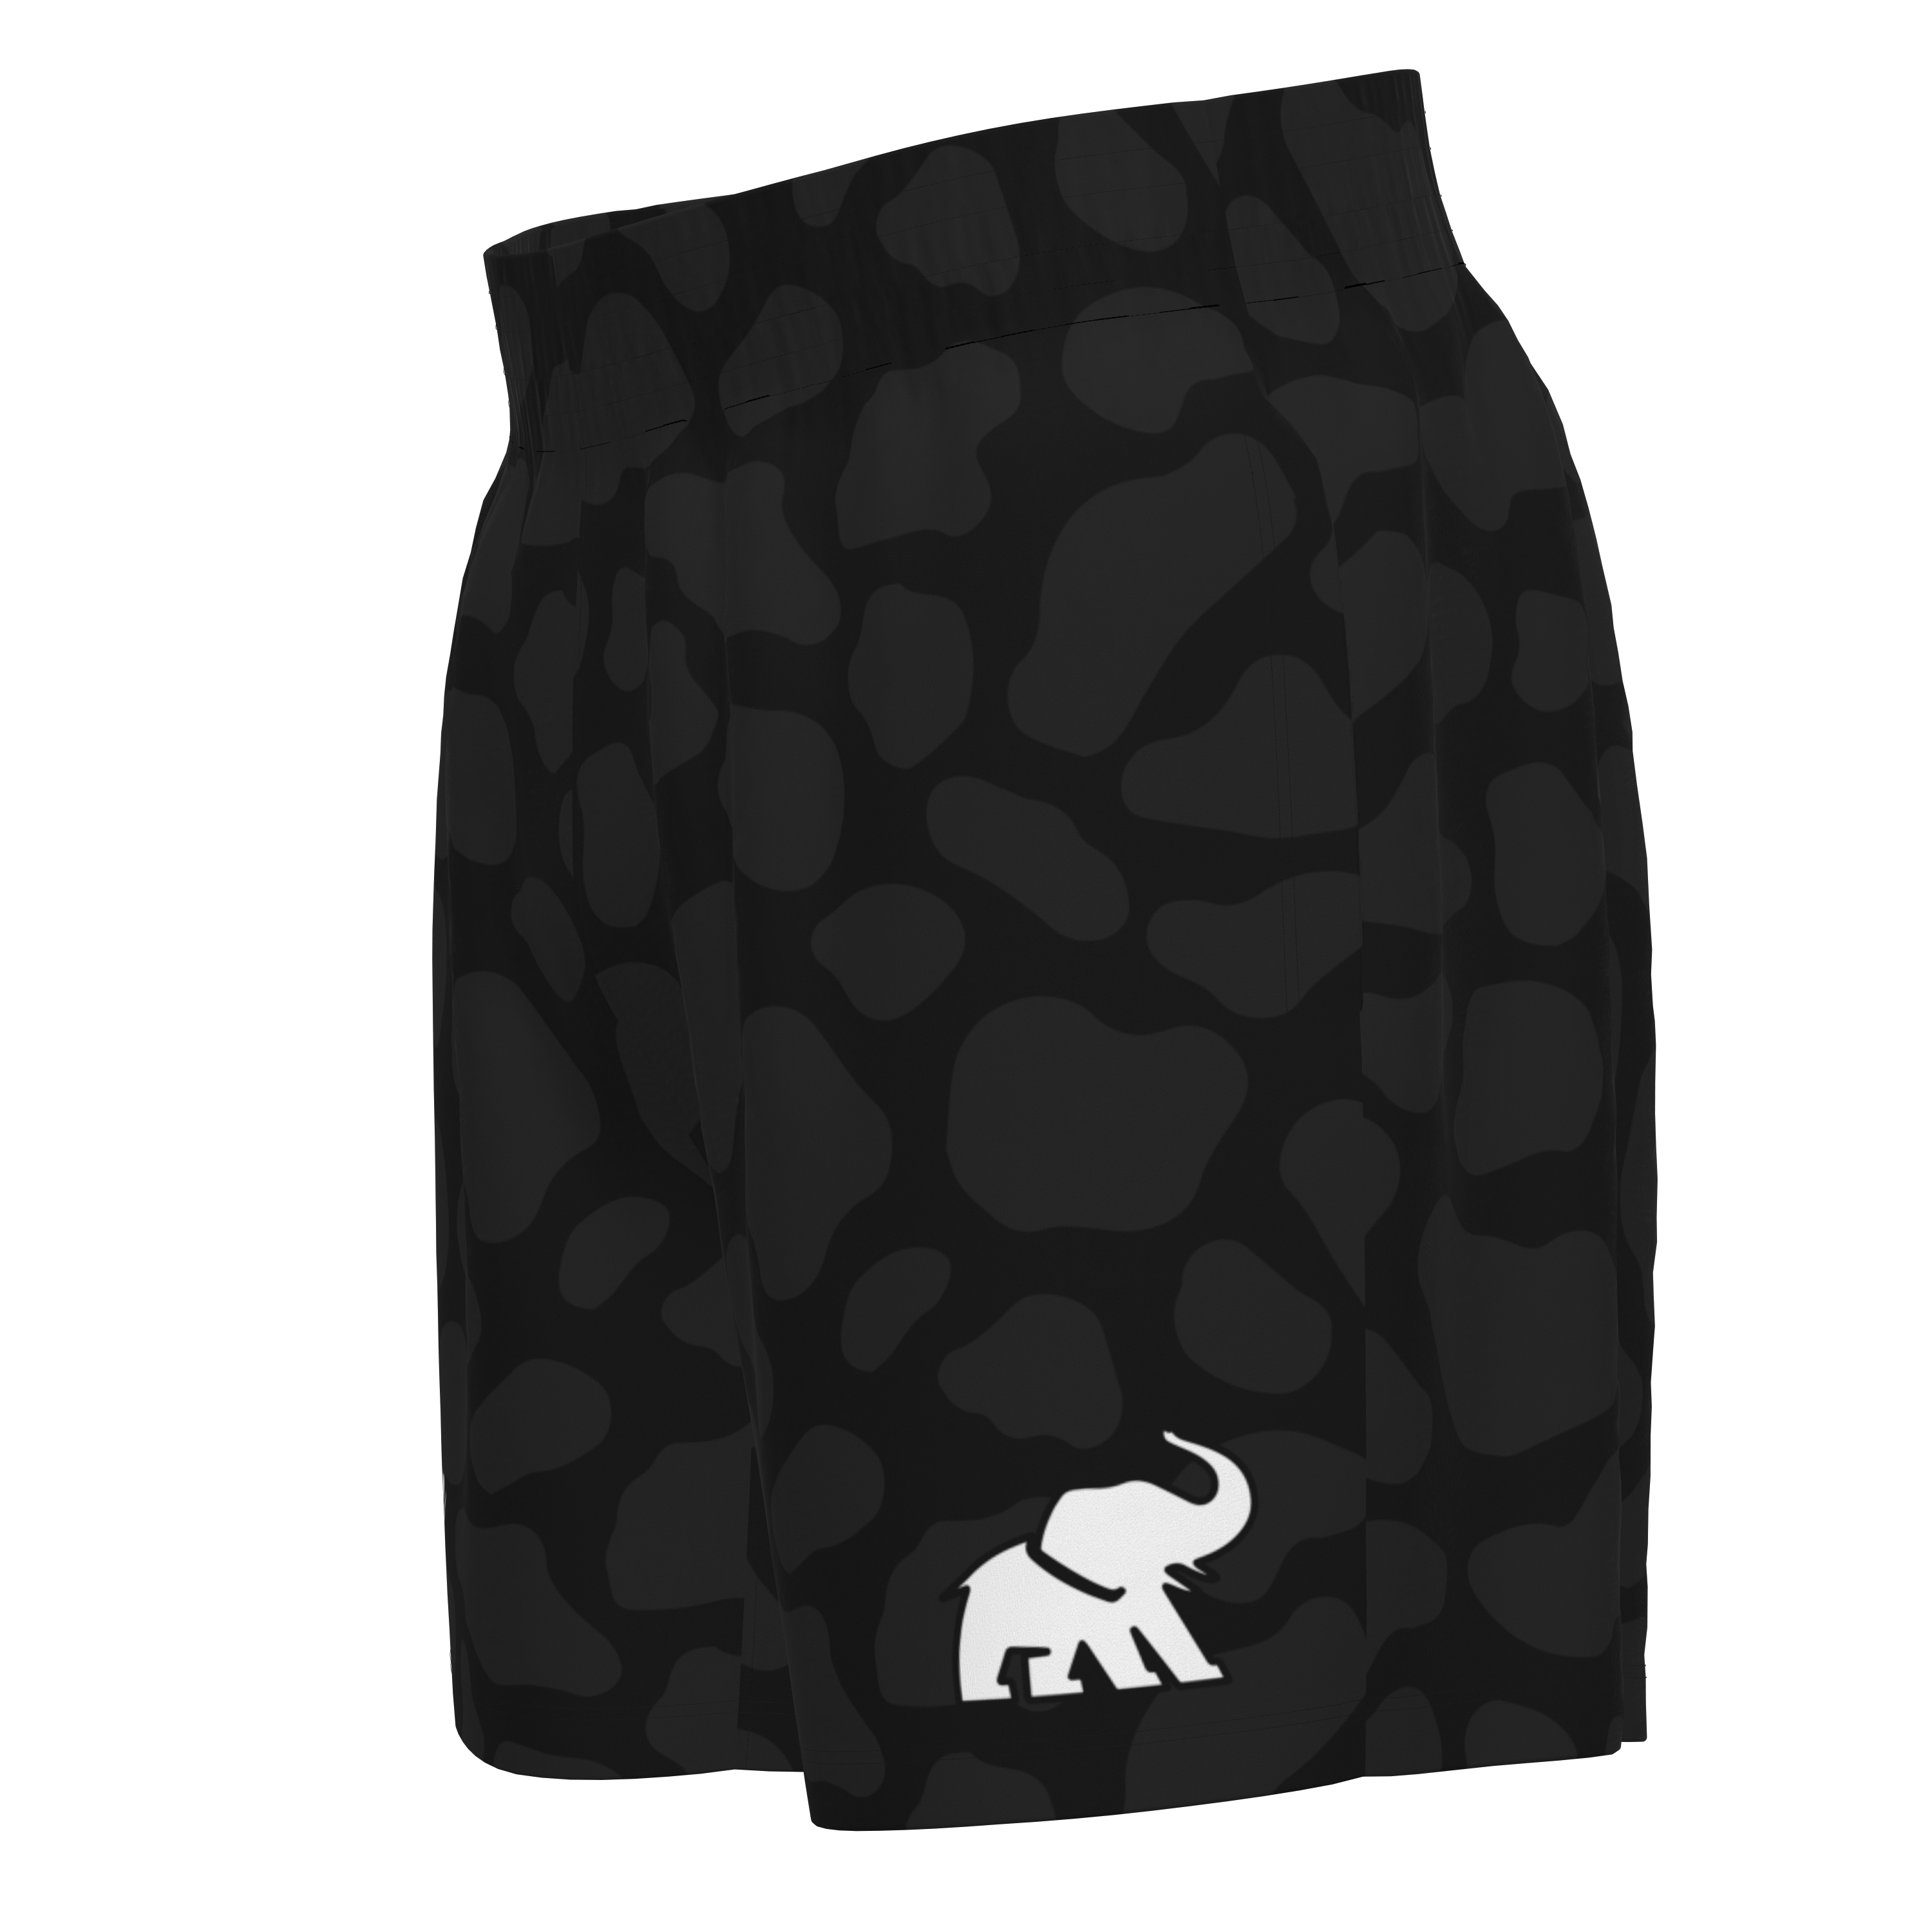 Kingdom Mesh Shorts - Black Leopard